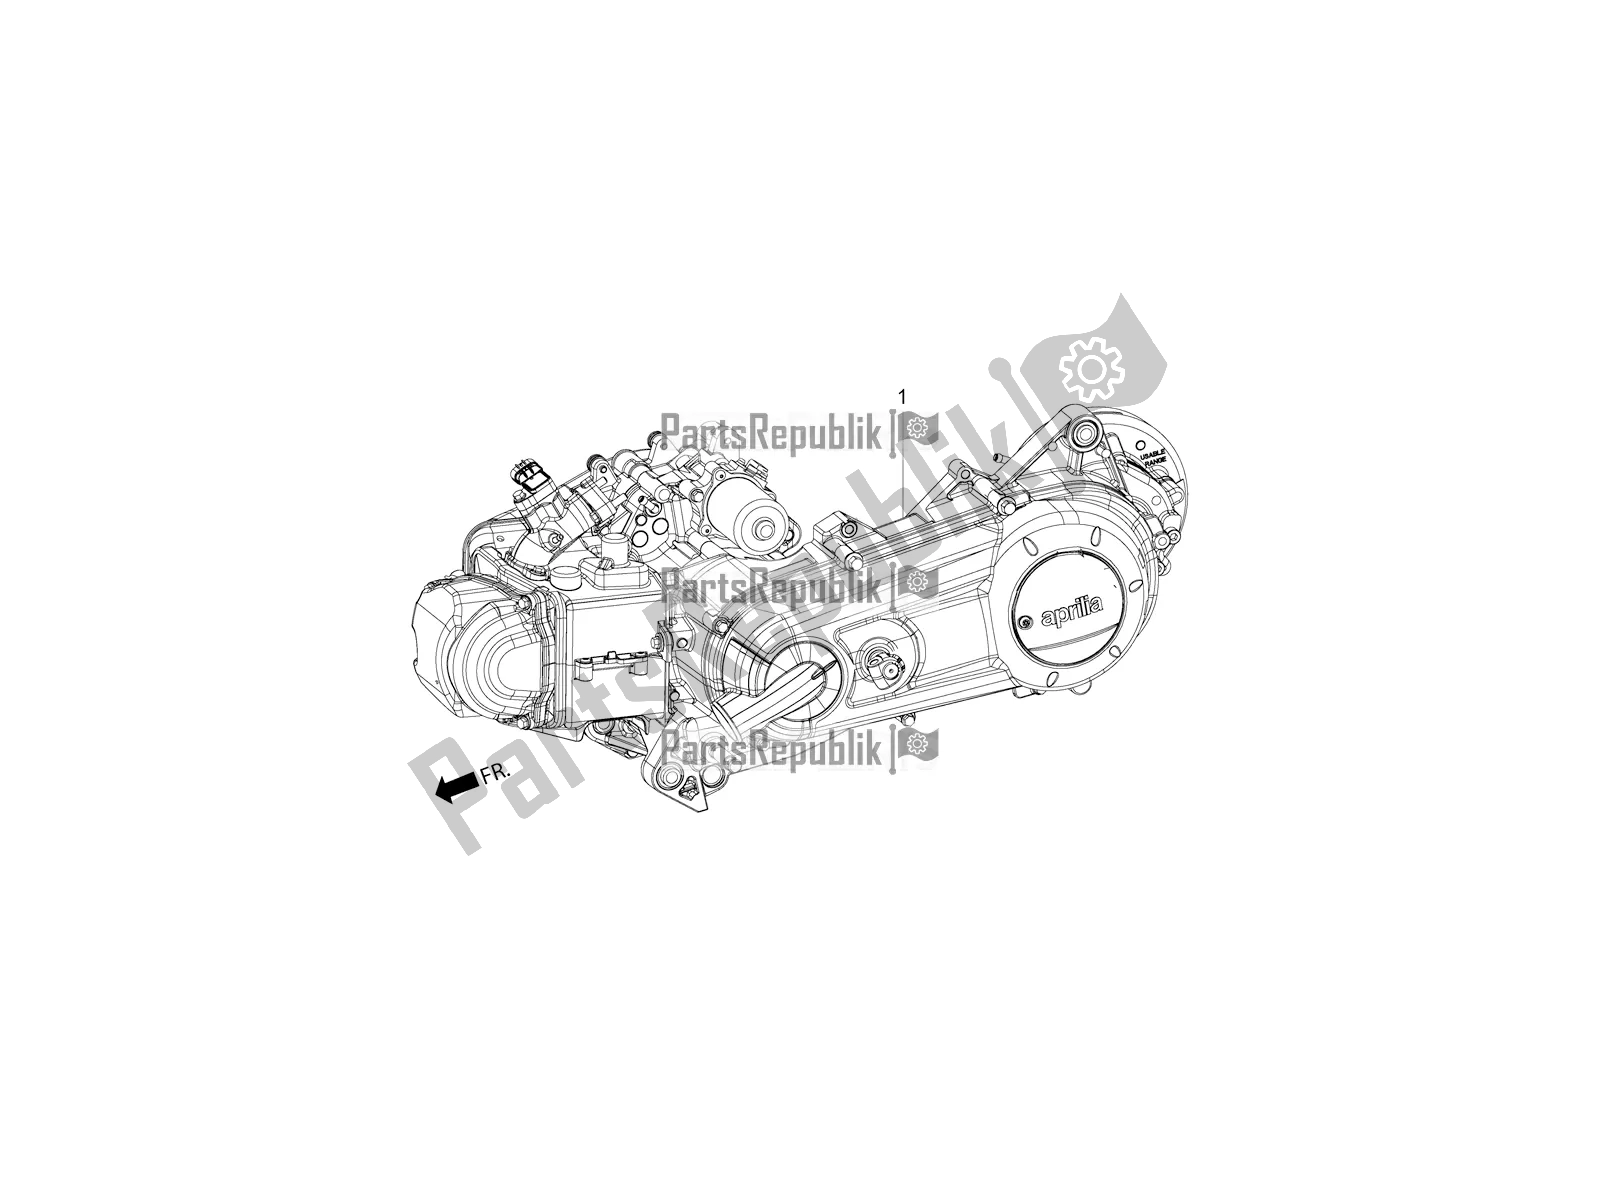 Alle Teile für das Complete Engine des Aprilia SR 125 Storm TT Bsiv Latam 2021